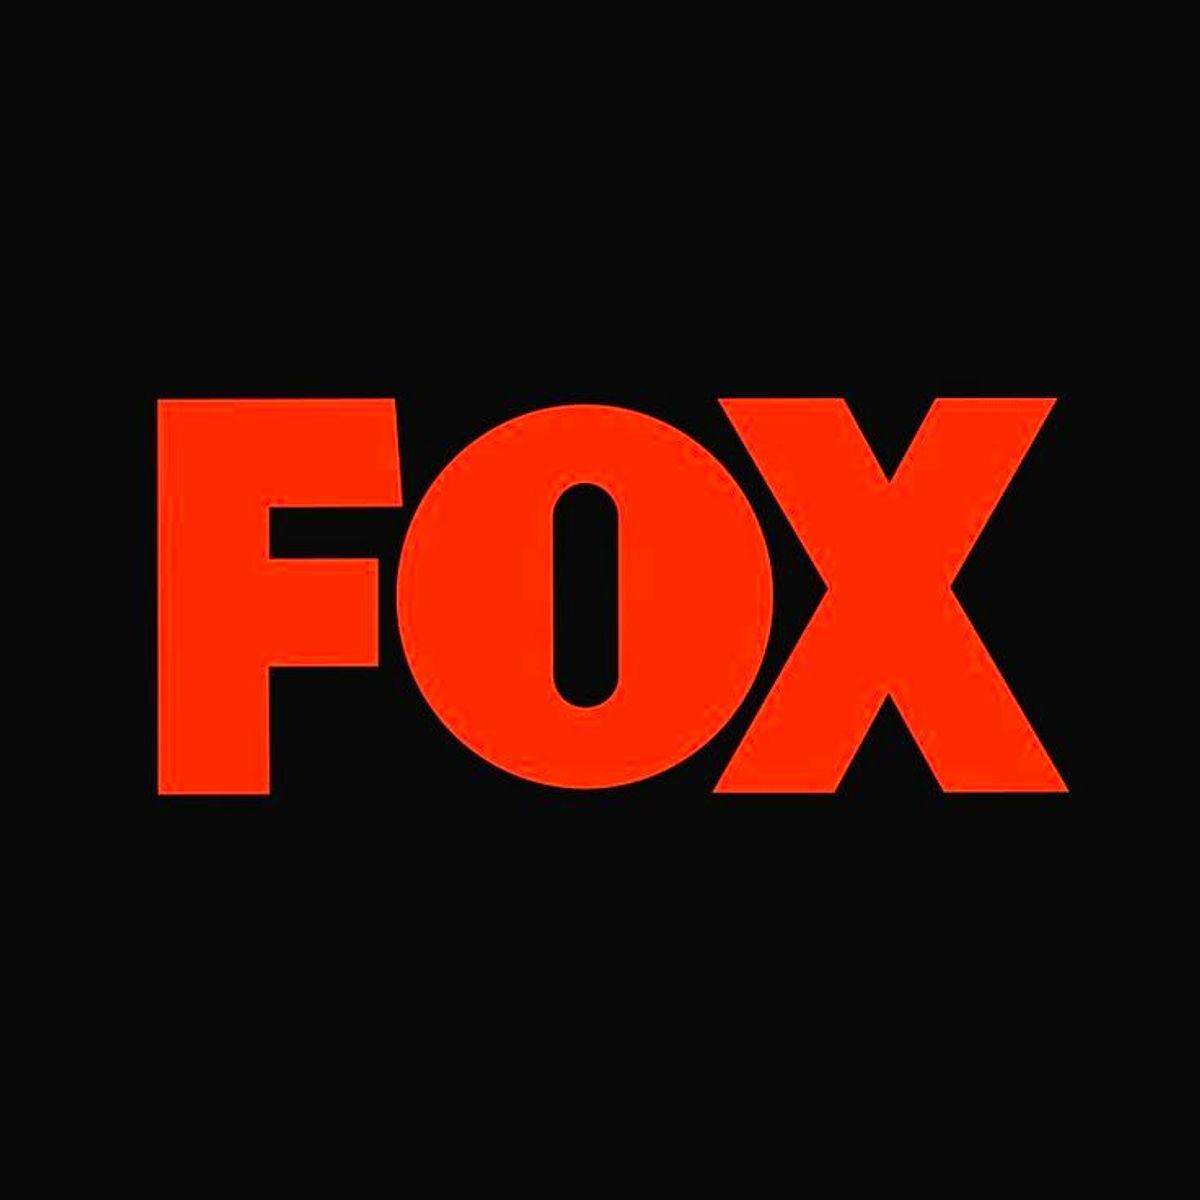 Fox now. Fox канал. Телекомпания Fox. Fox TV логотип.